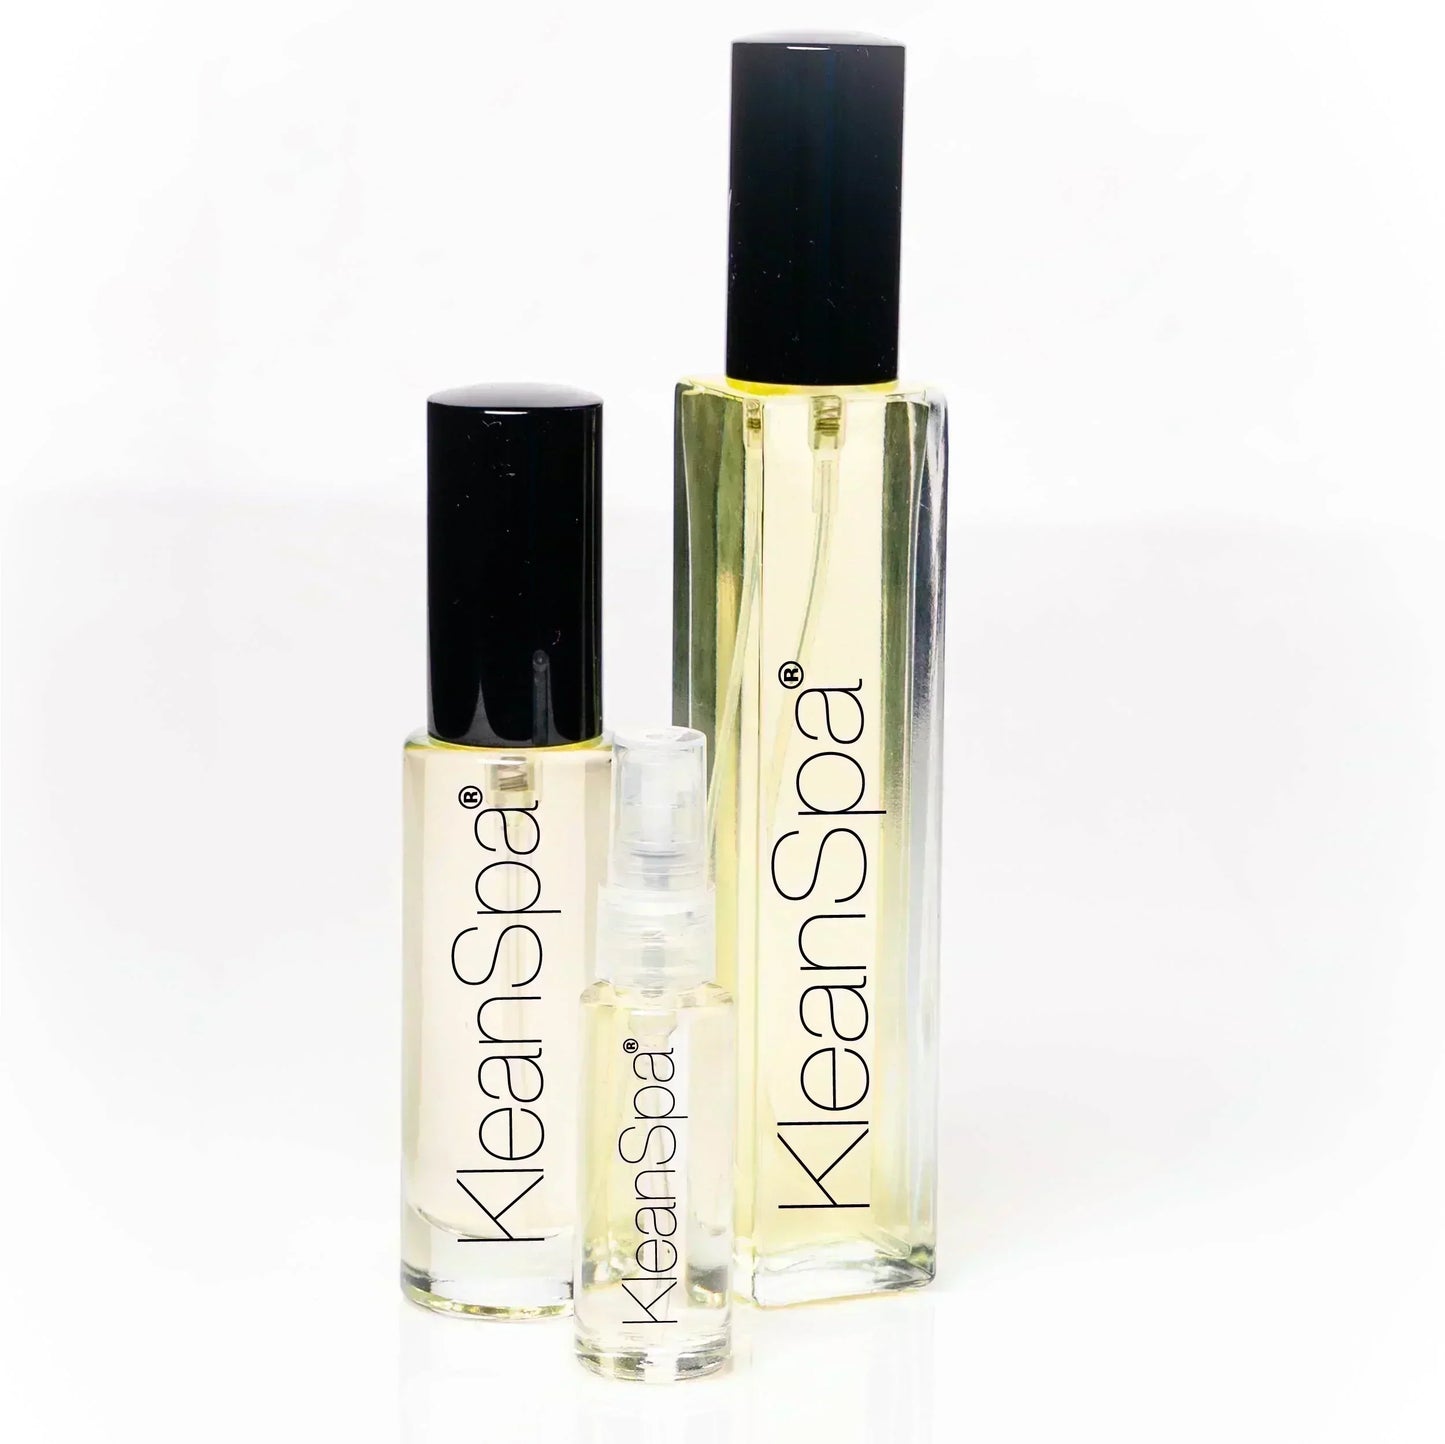 Load image into Gallery viewer, Extrait de Parfum (35% fragrance): Gent Scent
